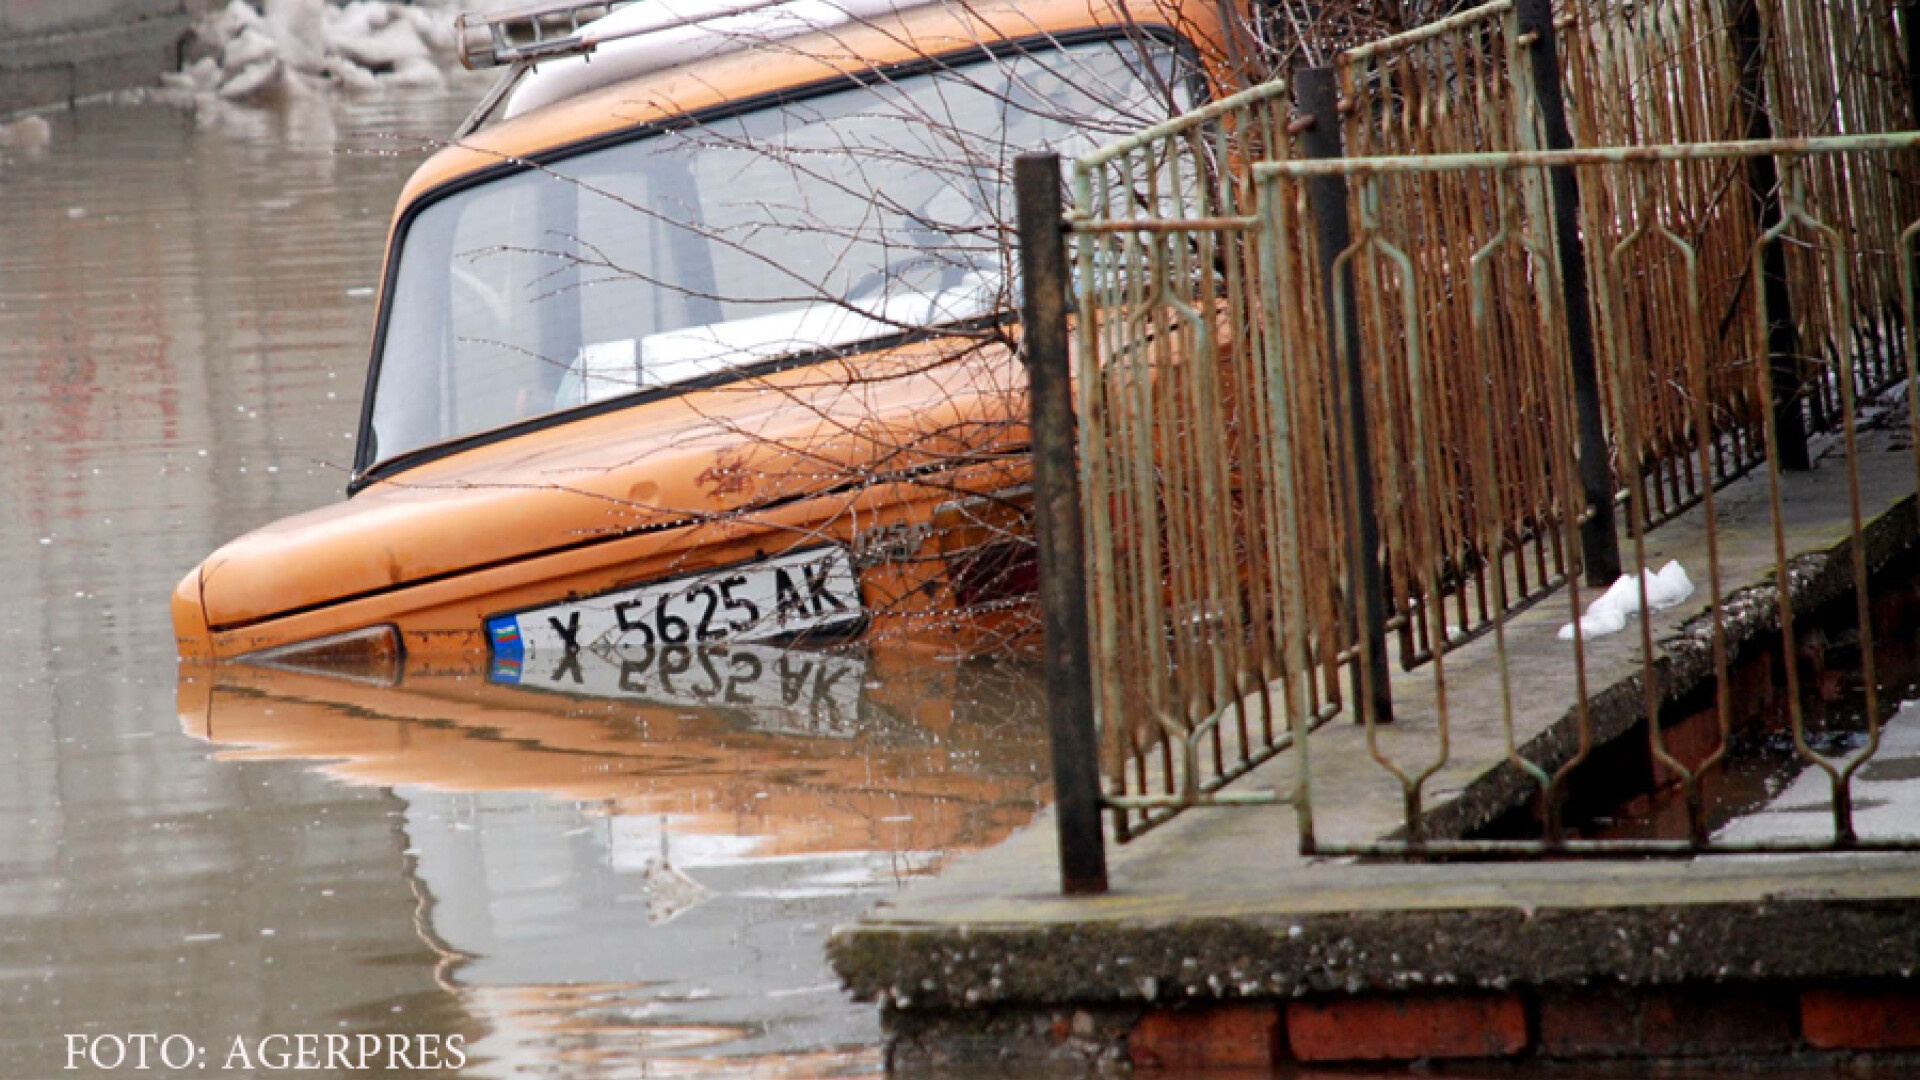 masina cu numar de Bulgaria scufundata in apa